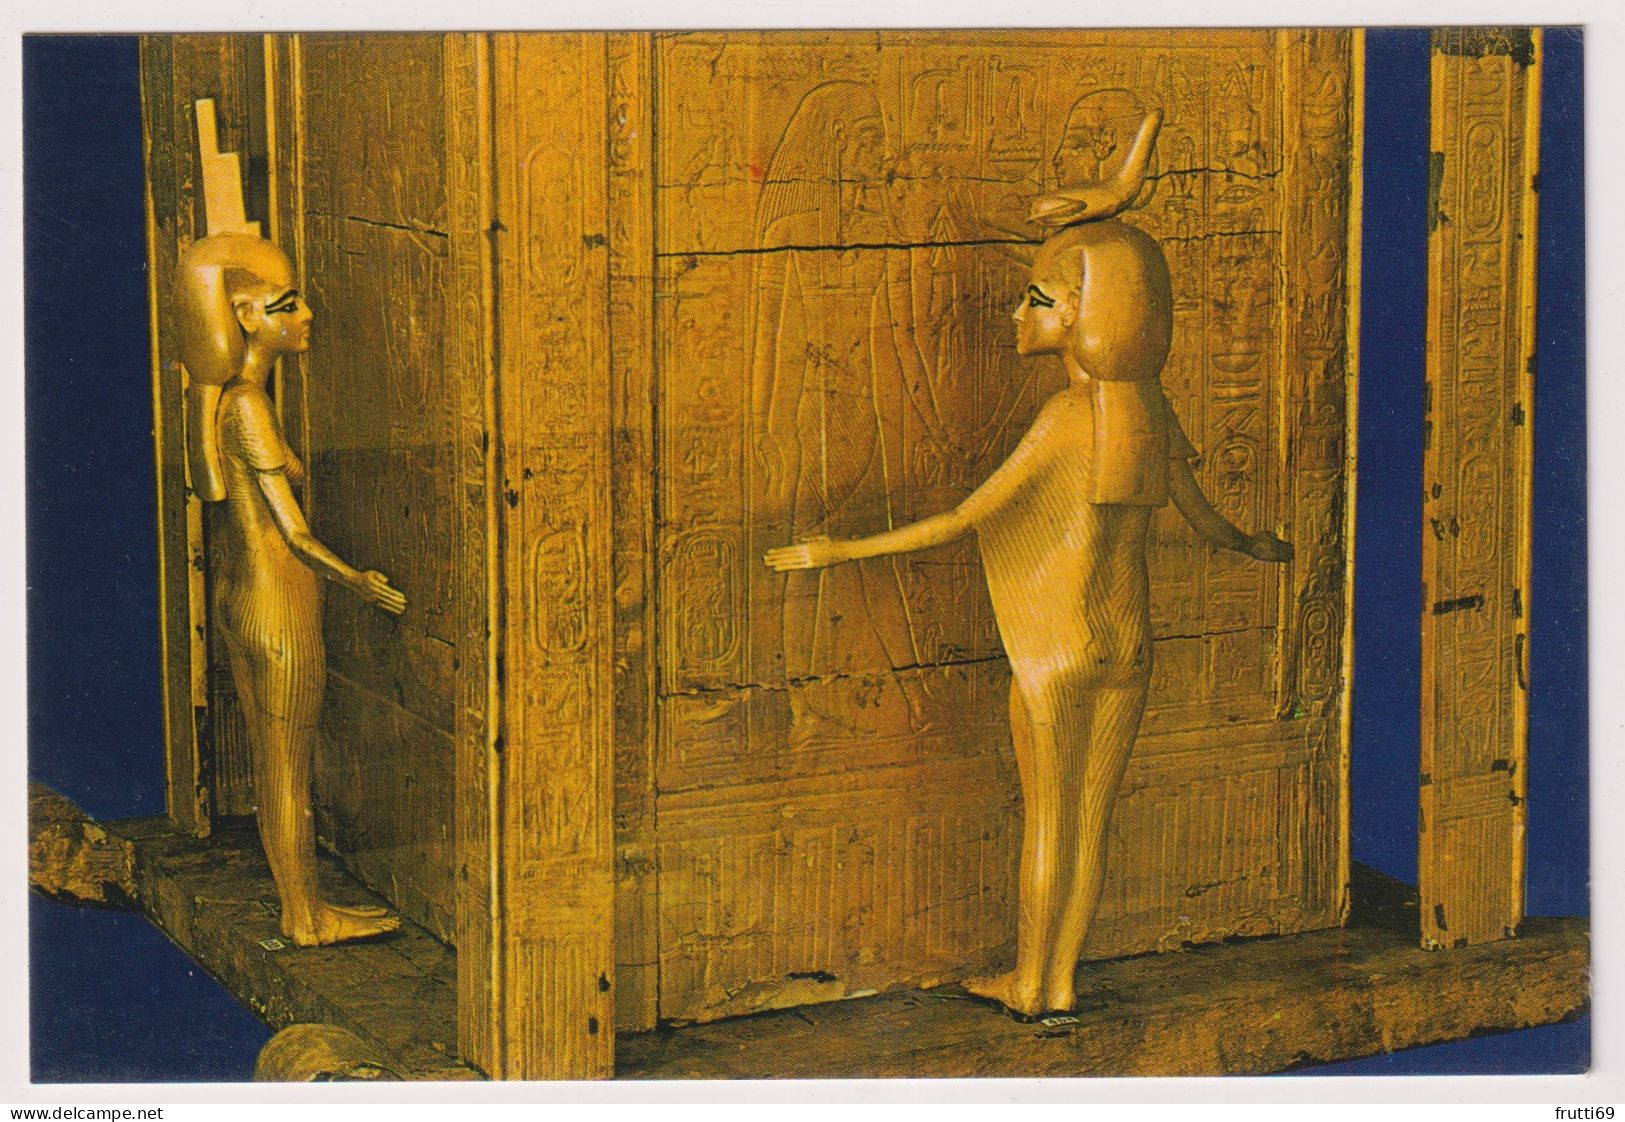 AK 198270 EGYPT -   Cairo - The Egyptian Museum - Tutankhamen's Treasures - Large Gold Canopie Chest - Museums